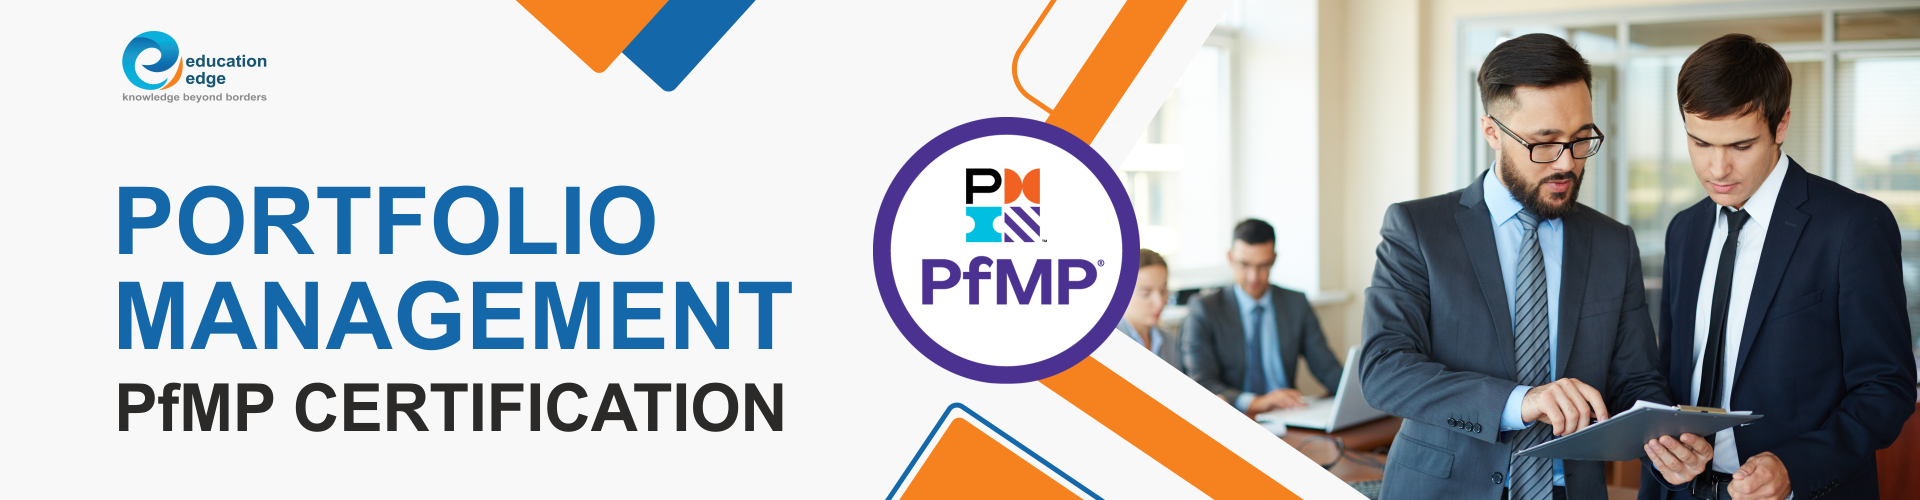 Portfolio Management - PfMP Certification